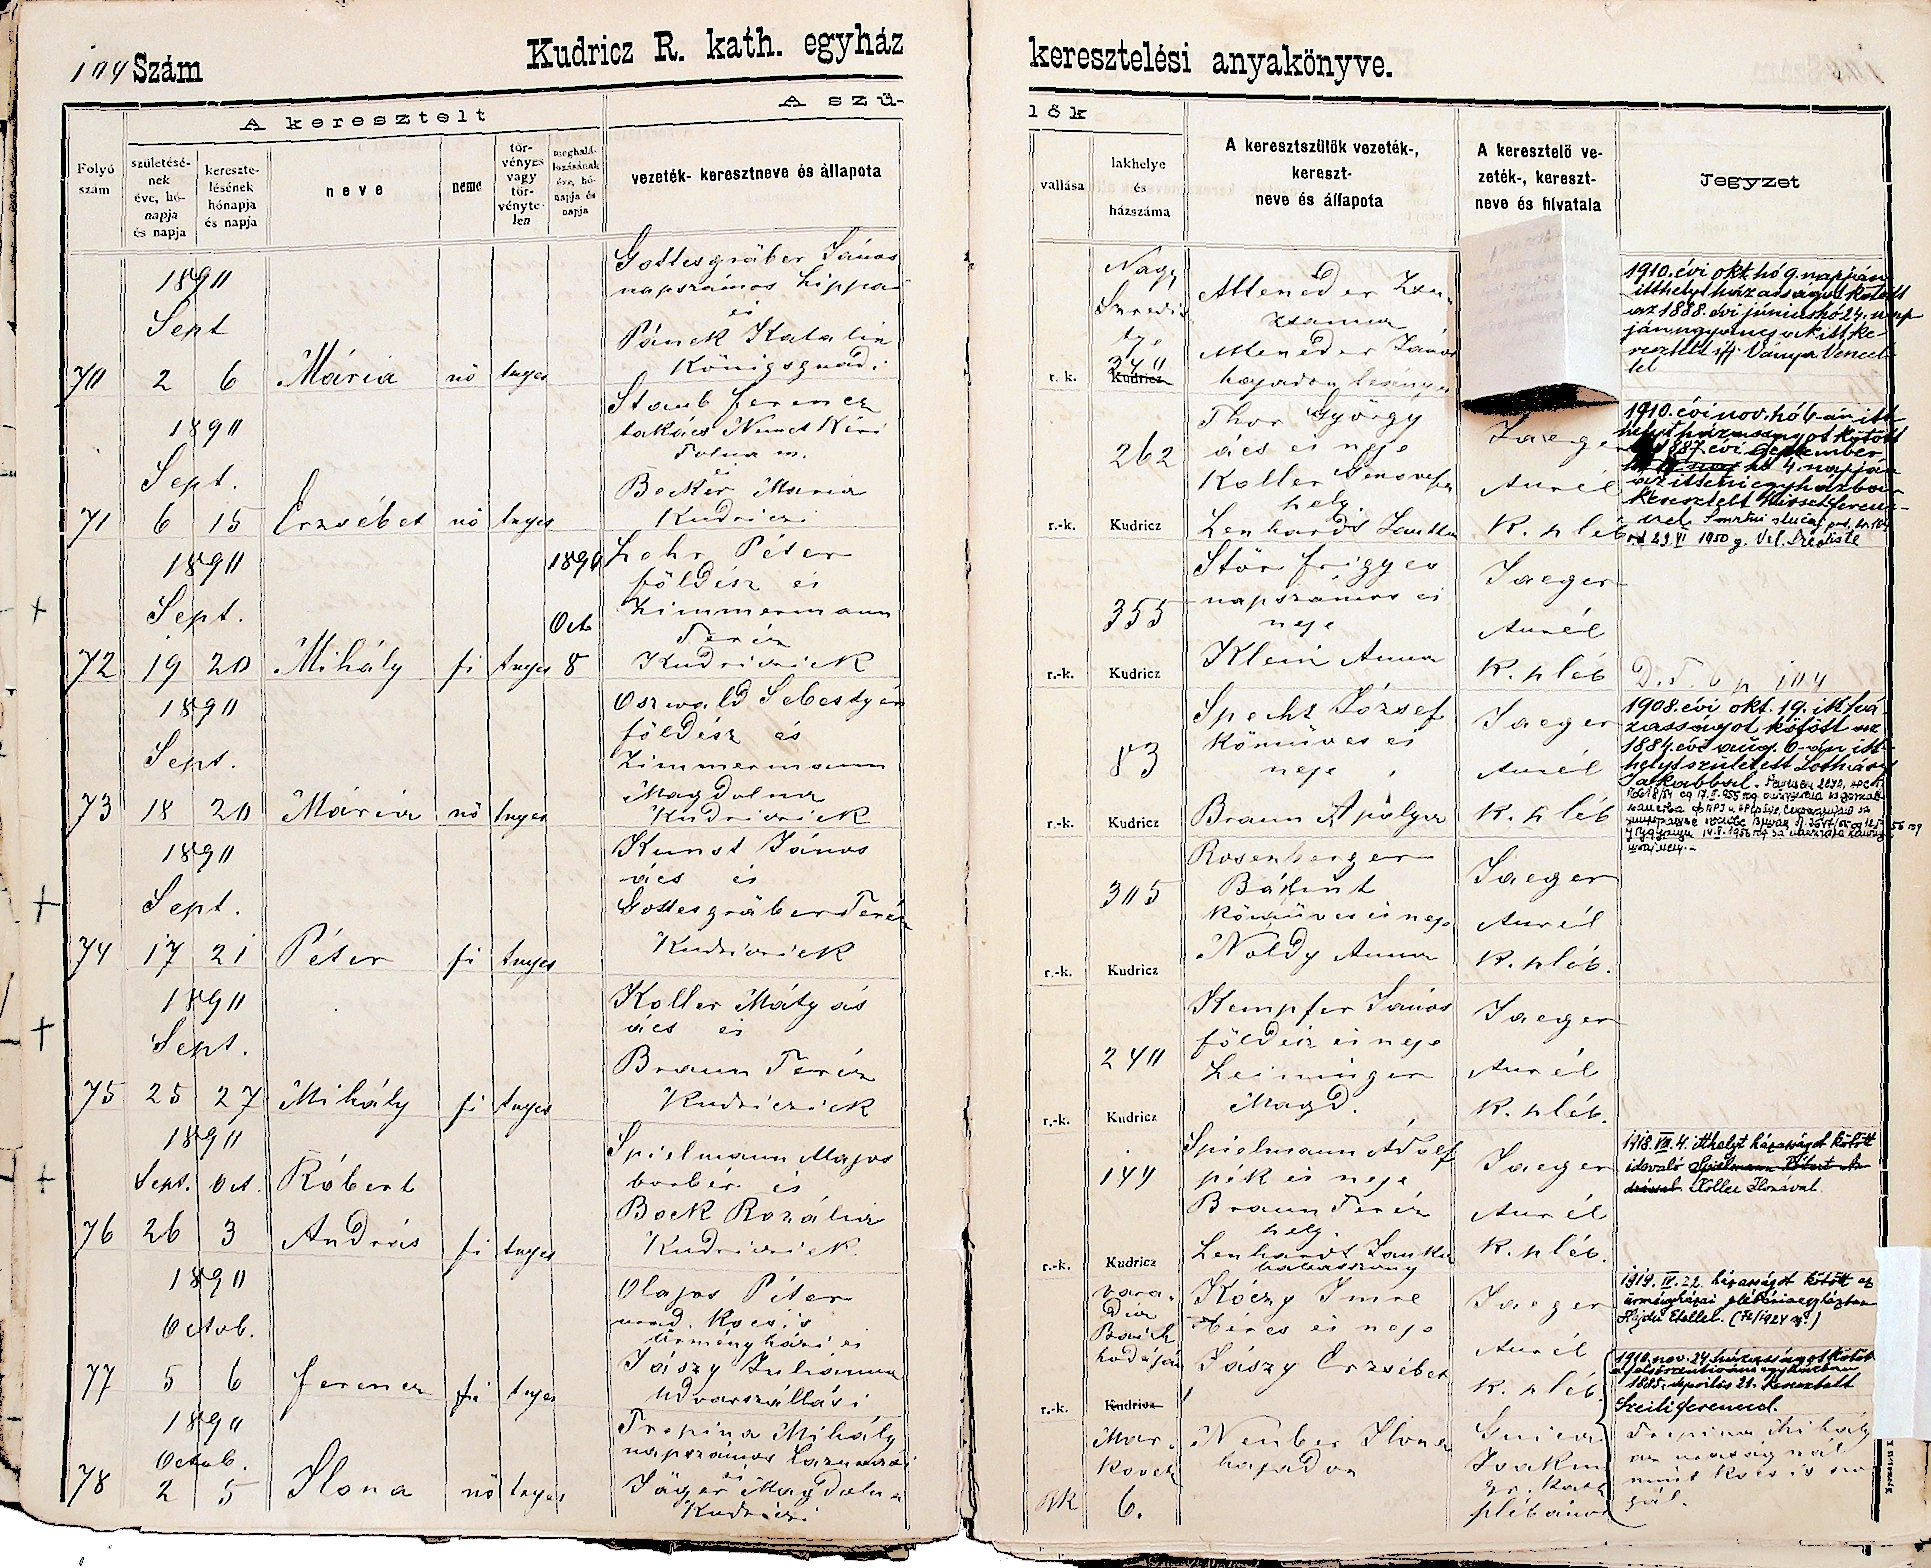 images/church_records/BIRTHS/1884-1899B/1890/104a